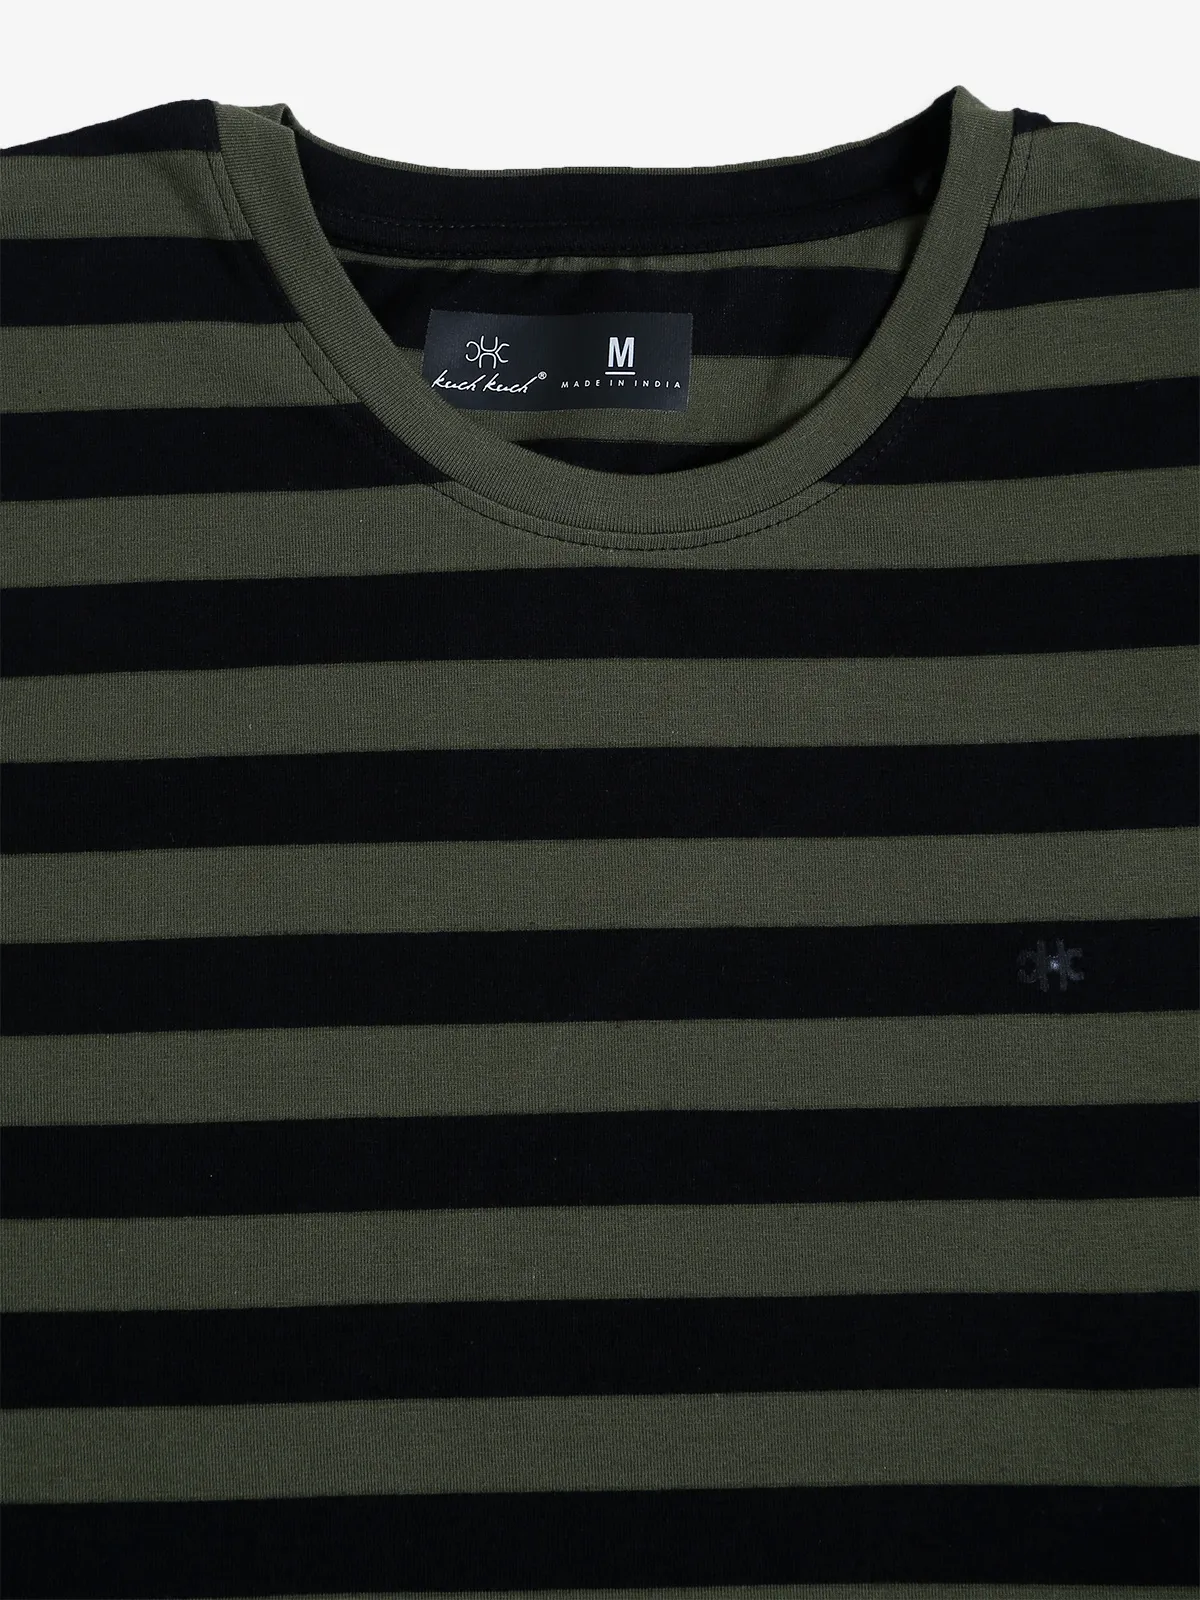 Kuch Kuch olive and black stripe t shirt